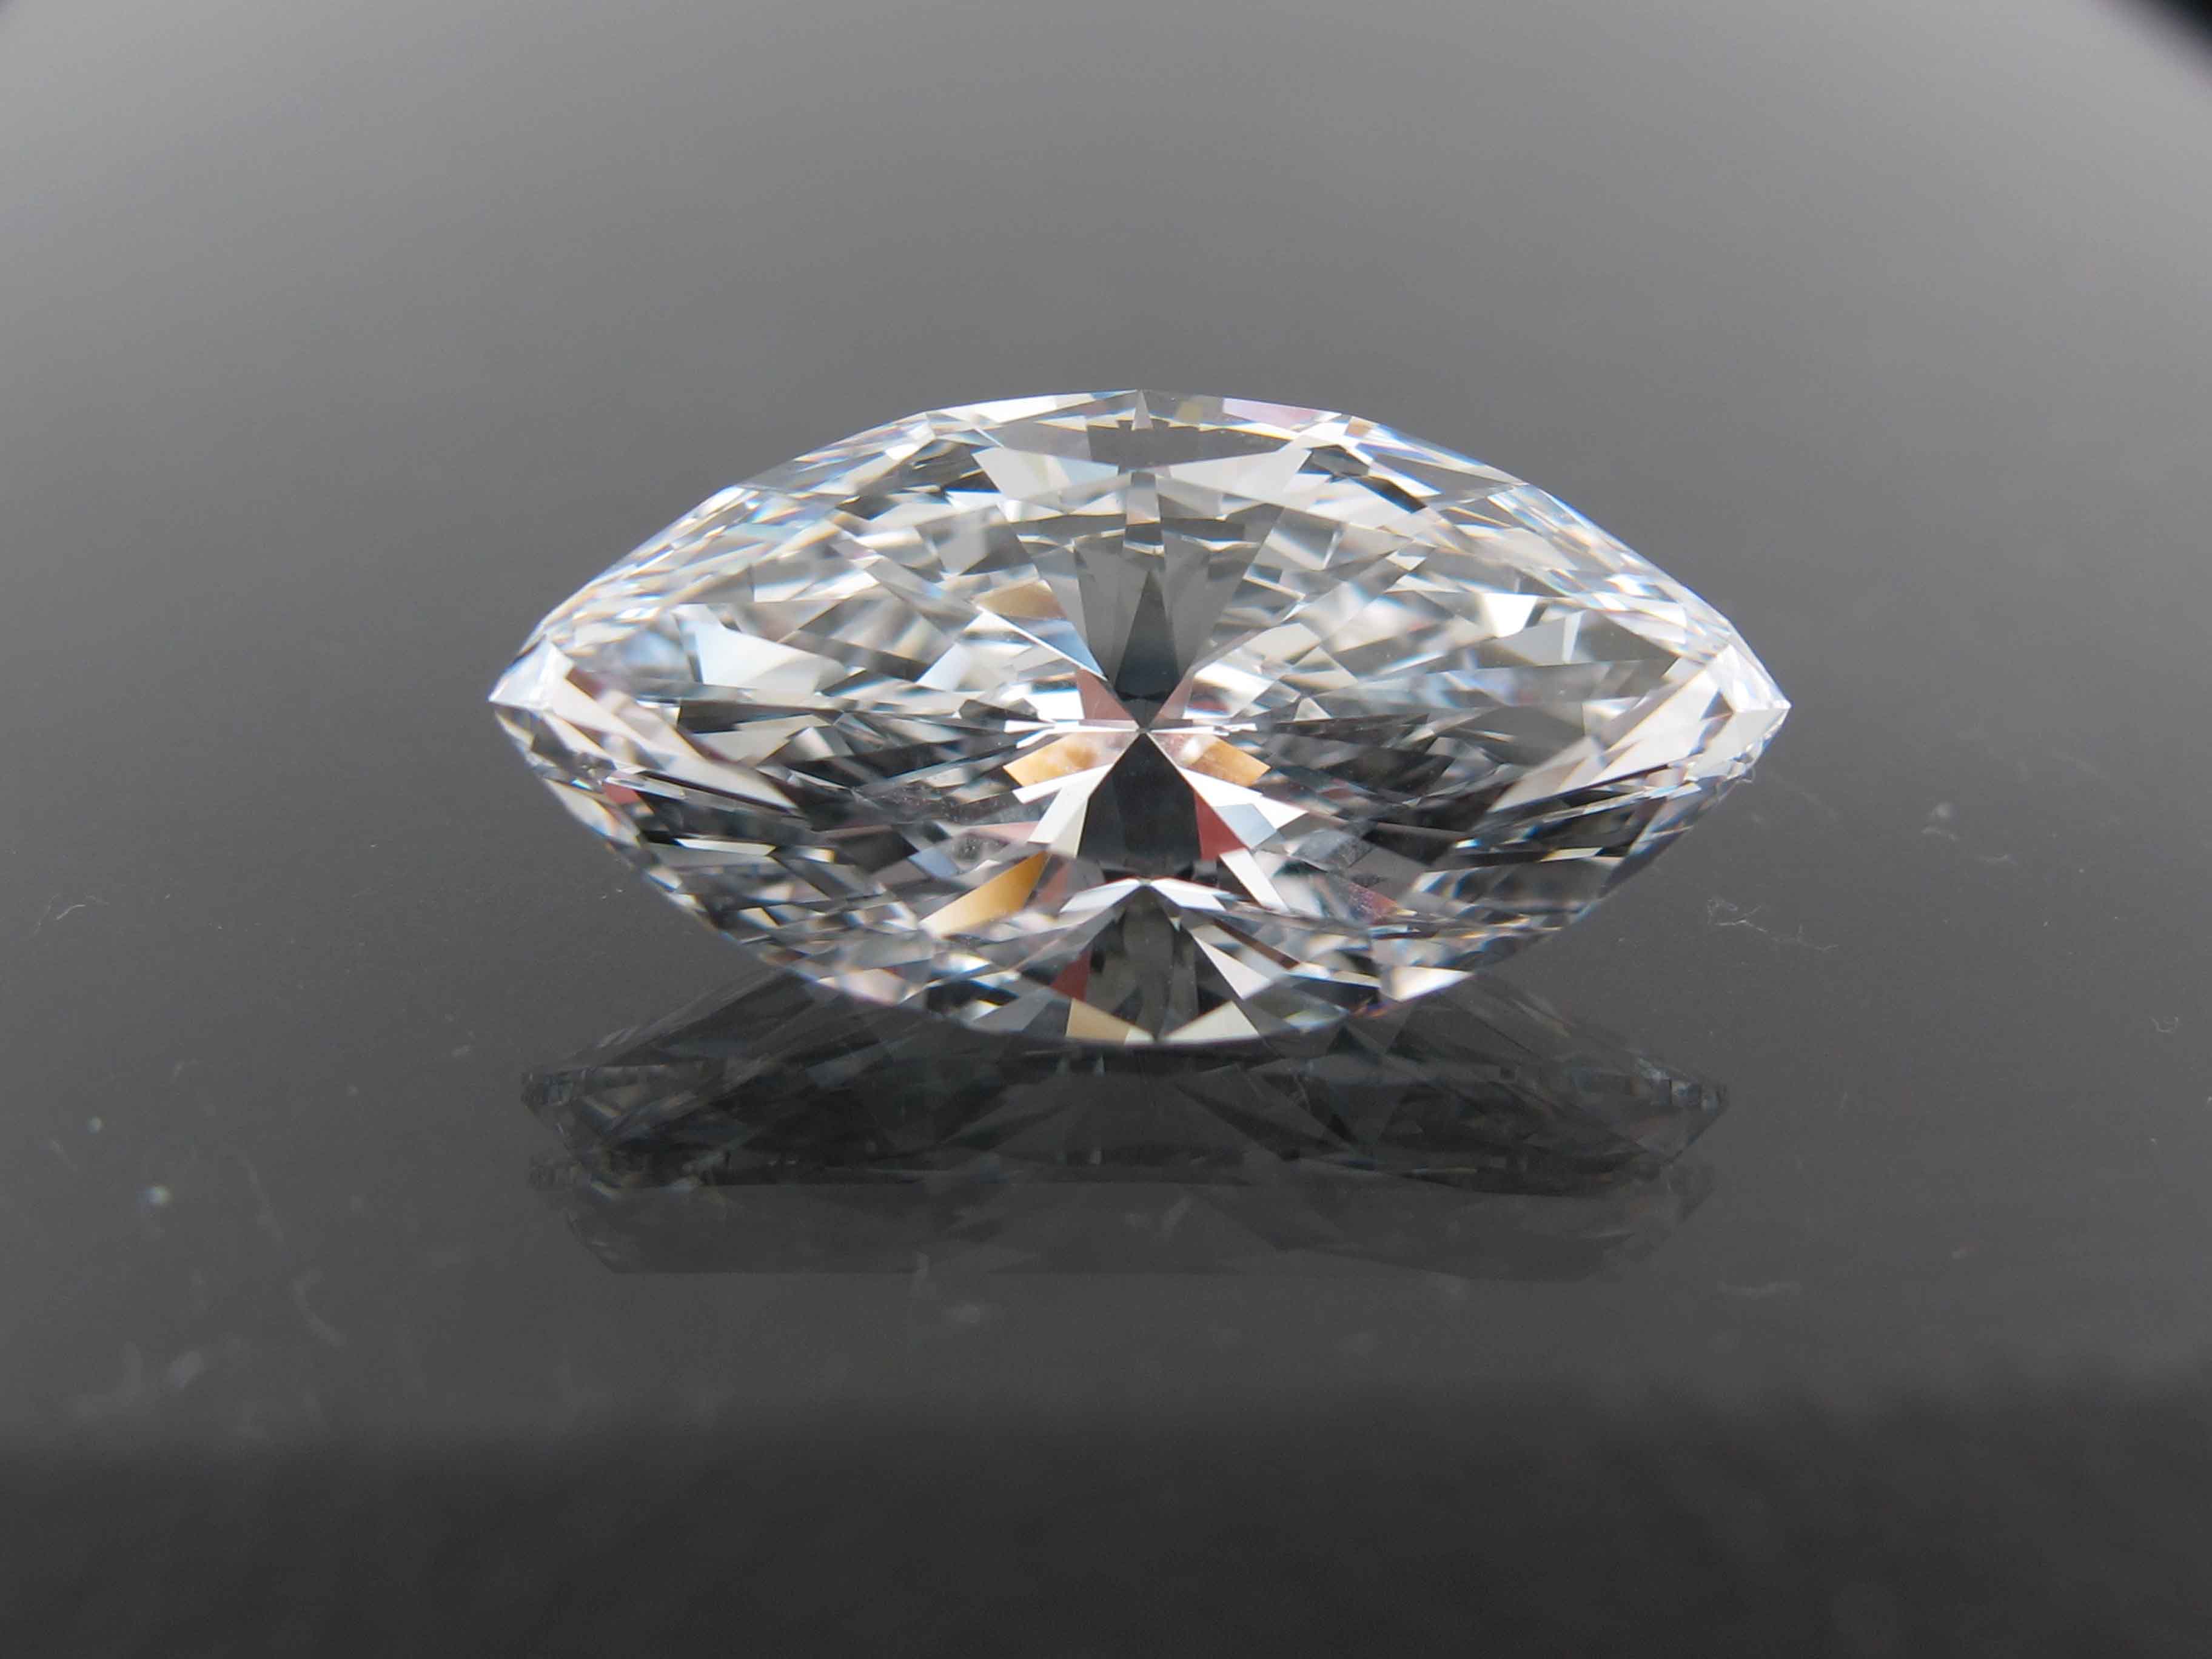 5.22 Carat - Marquise Cut Loose Diamond, IF Clarity, D Color, Excellent Cut